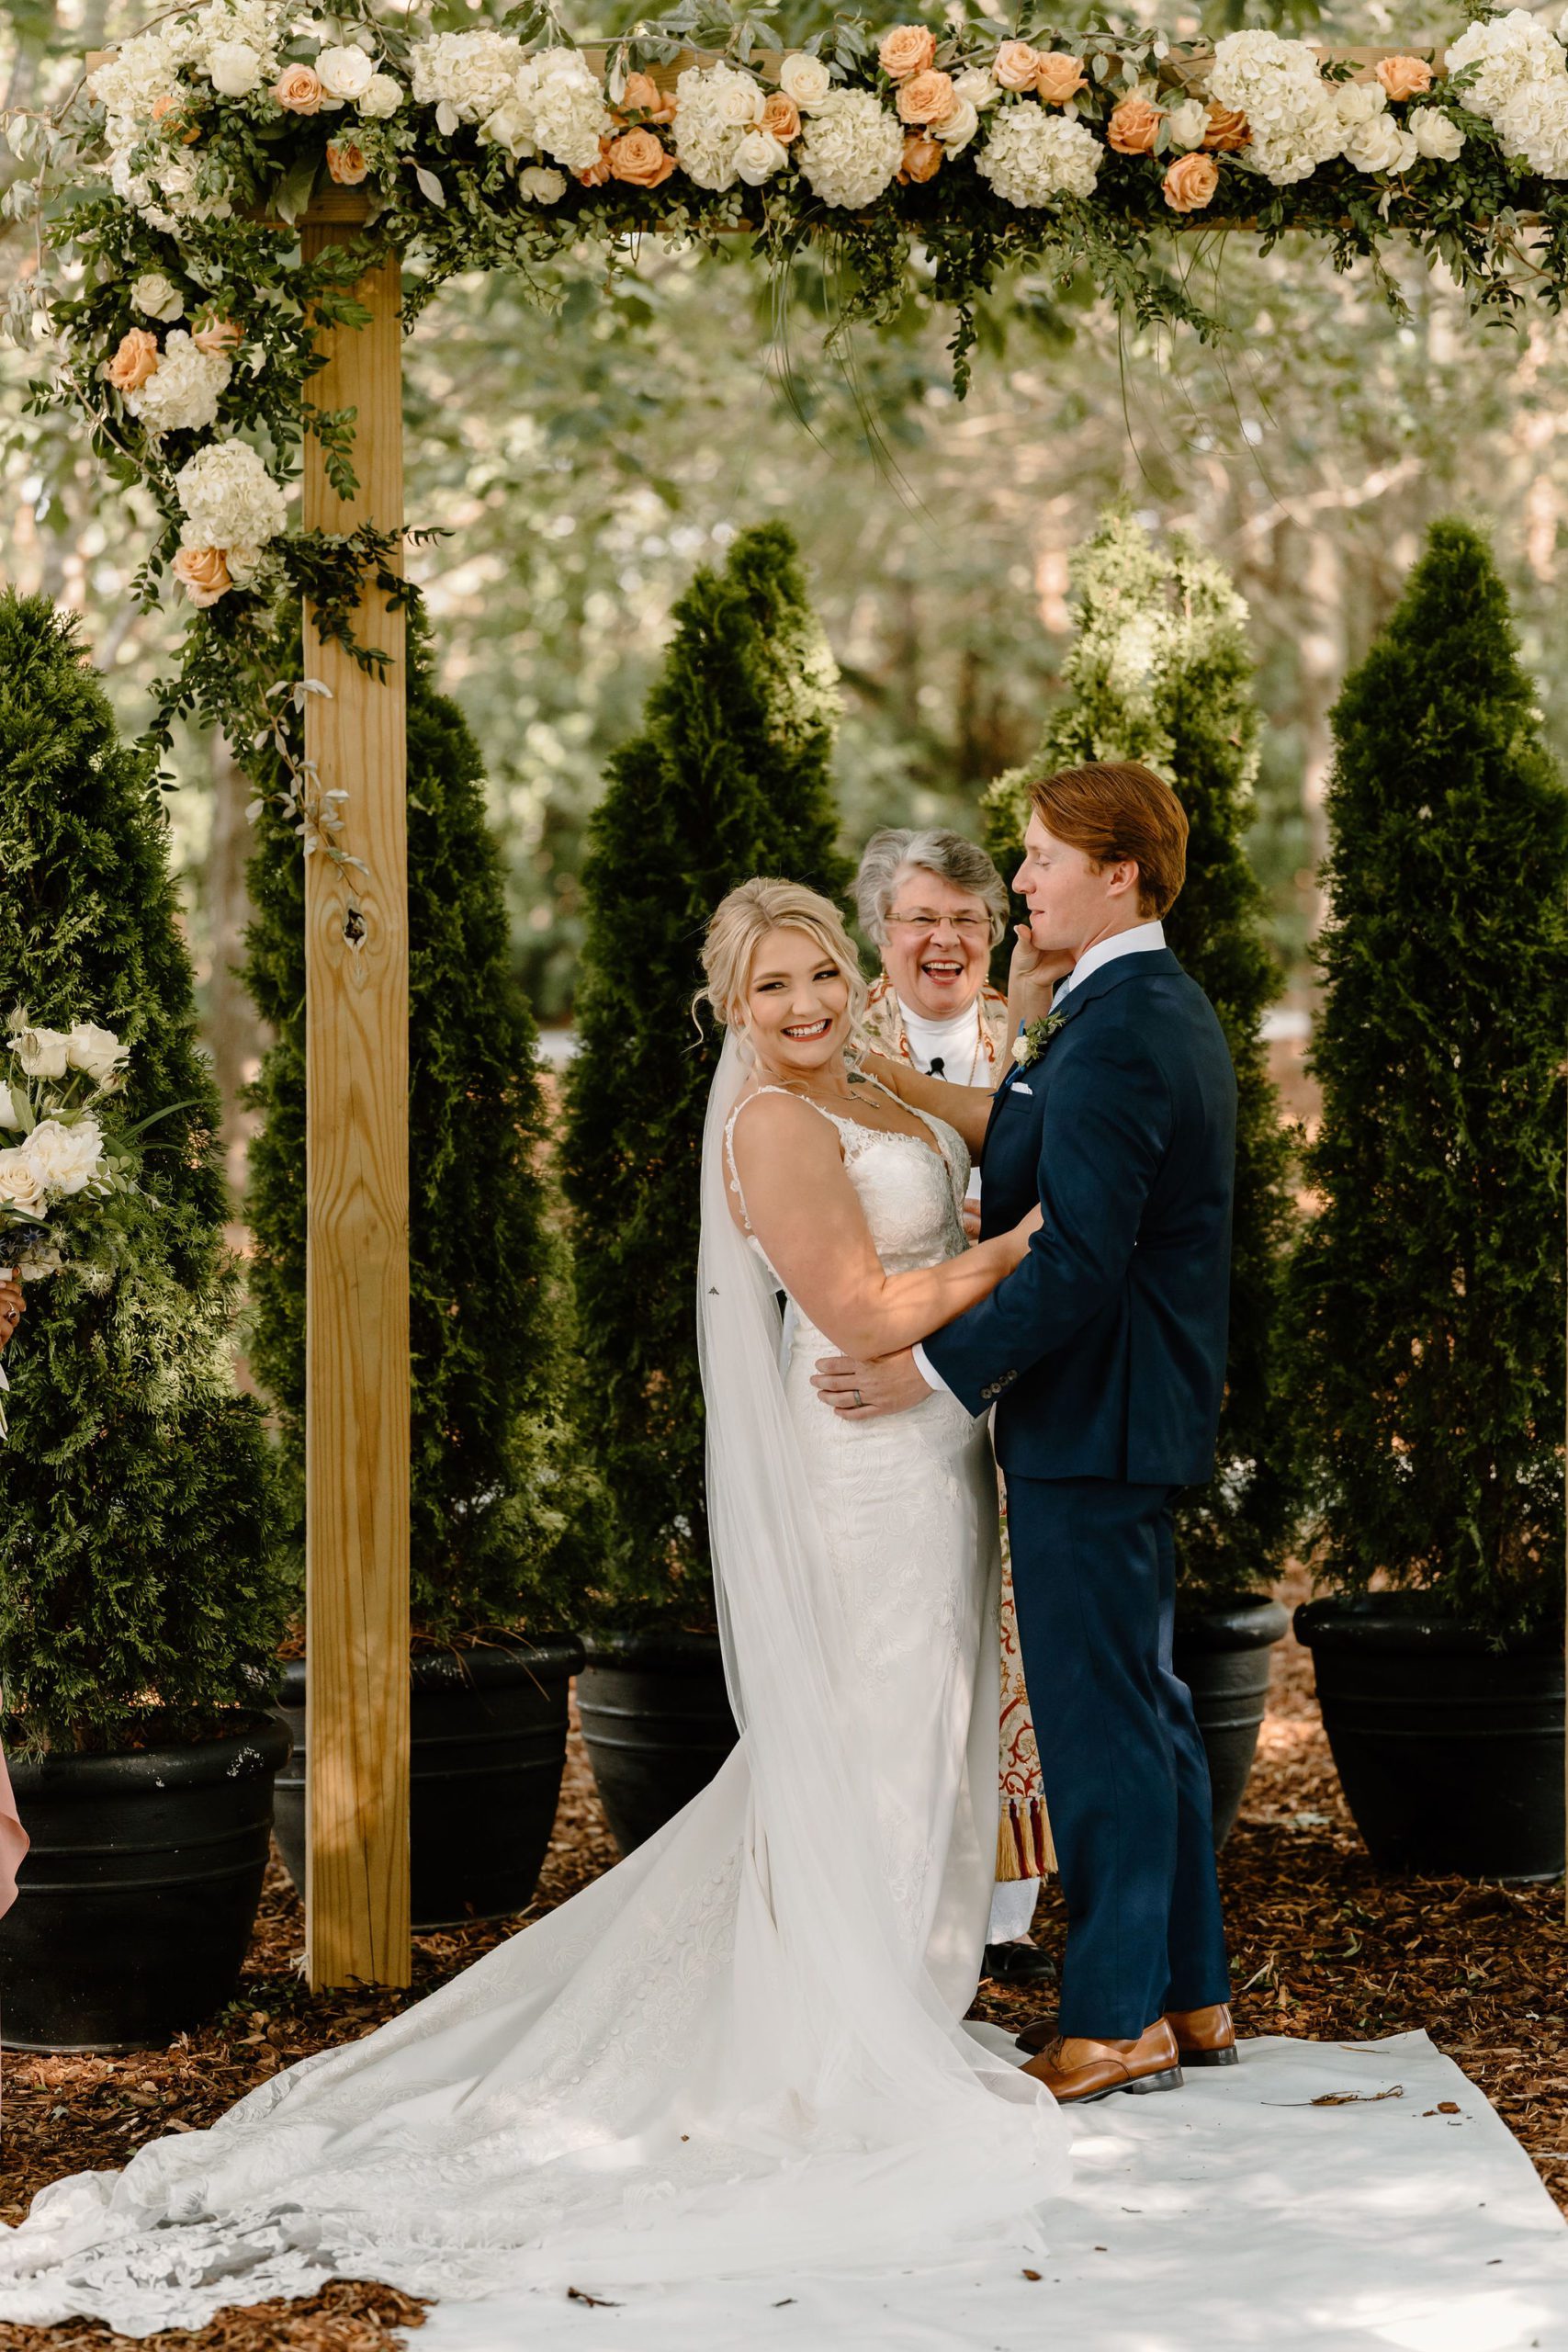 A Romantic Outdoor Wedding Day At Long Acres Barn In North Carolina